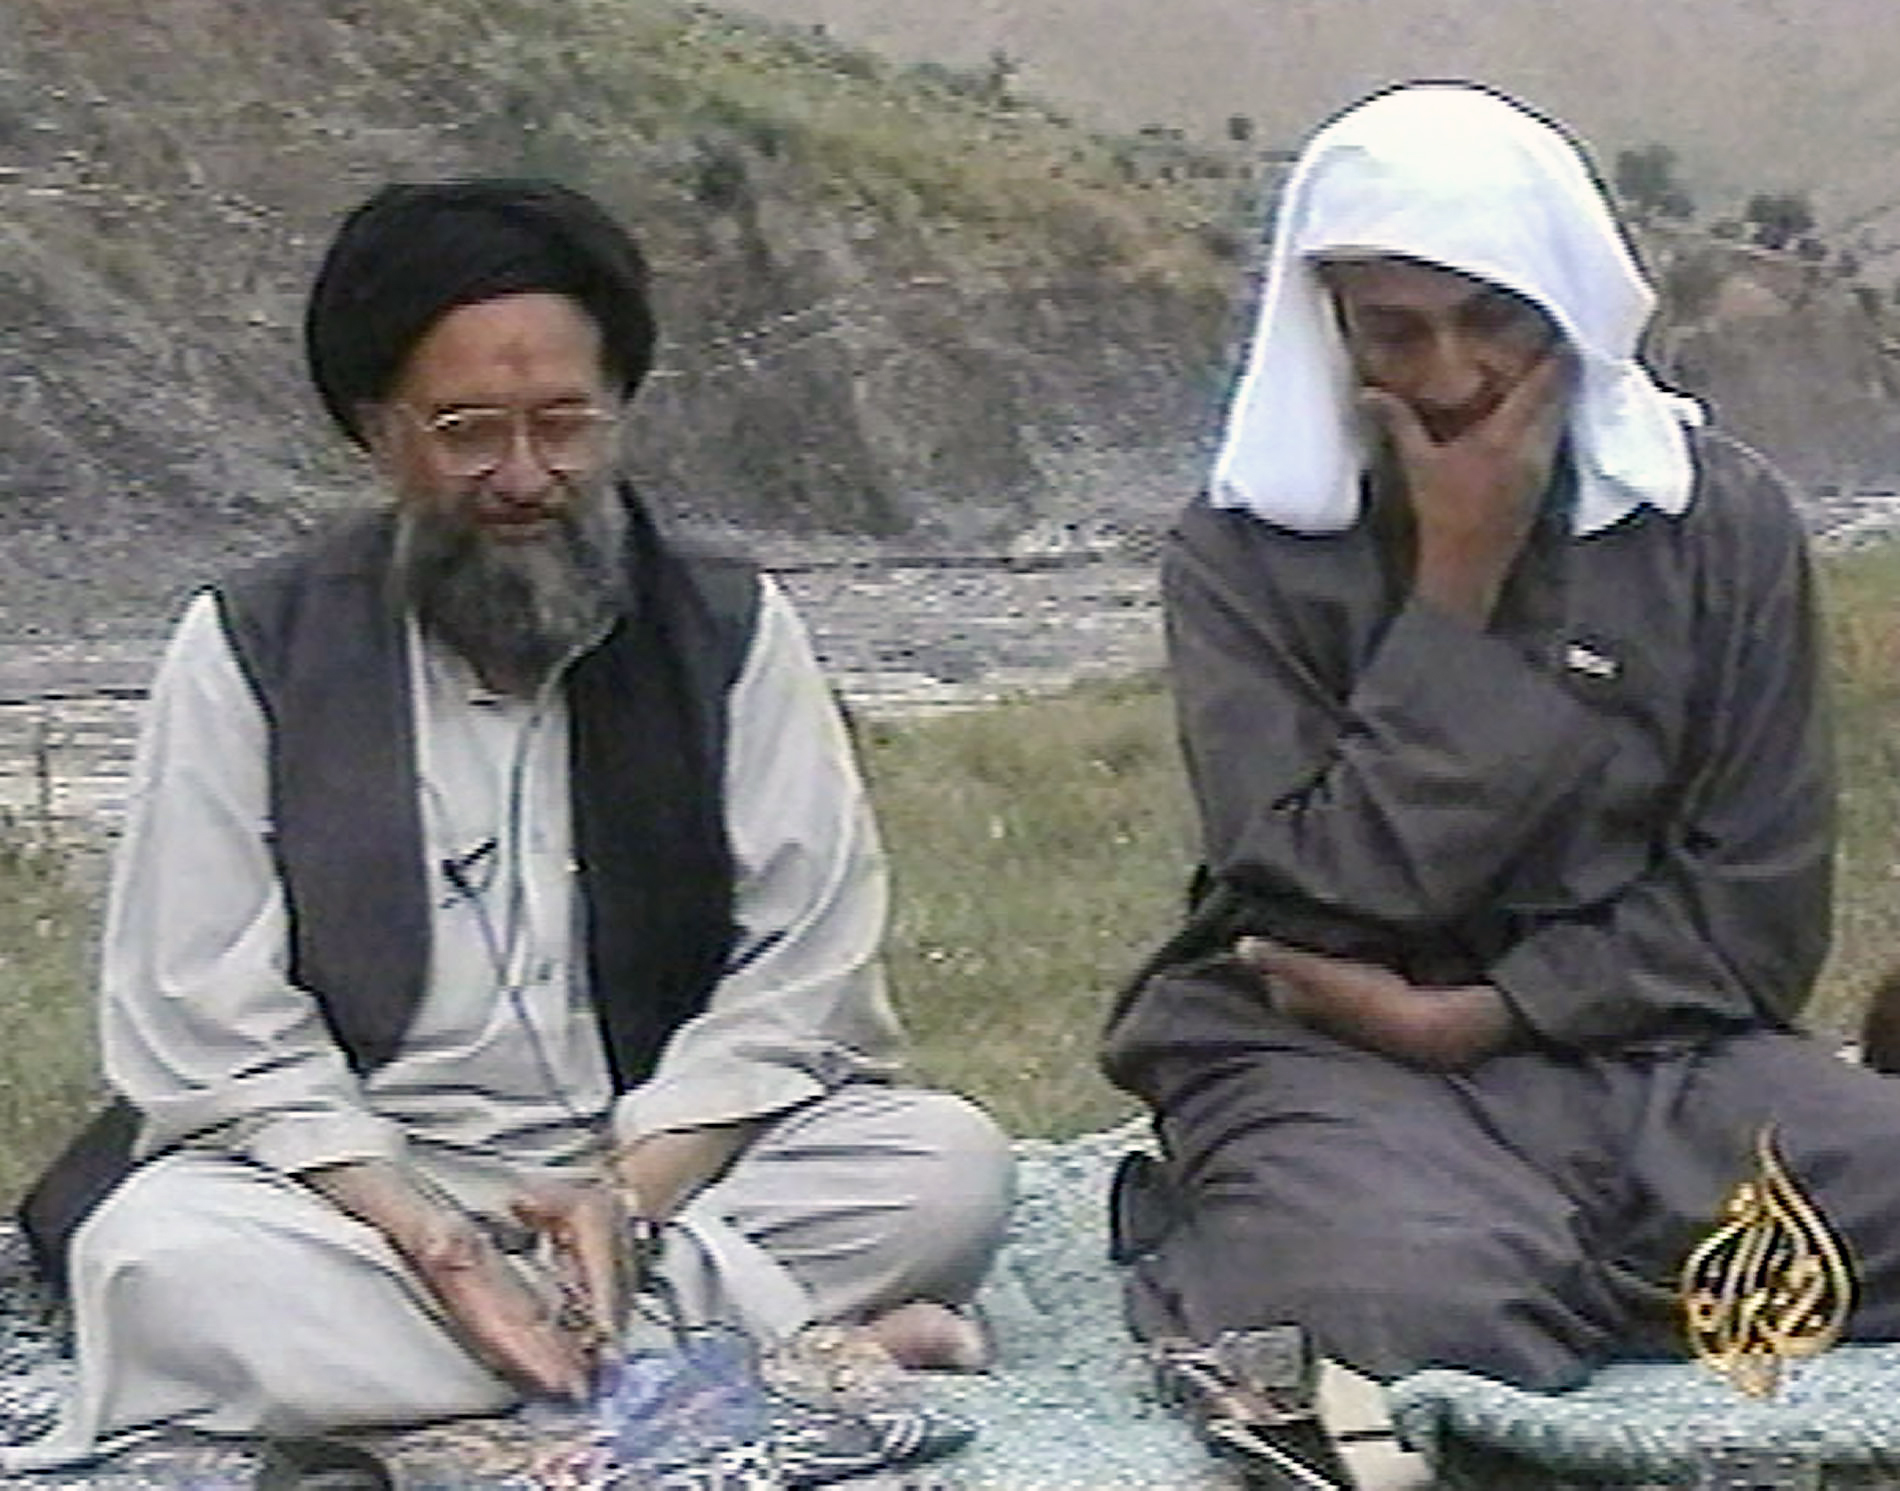 Osama bin Laden, right, listens as his top deputy Ayman al-Zawahri speaks at an undisclosed location in 2002